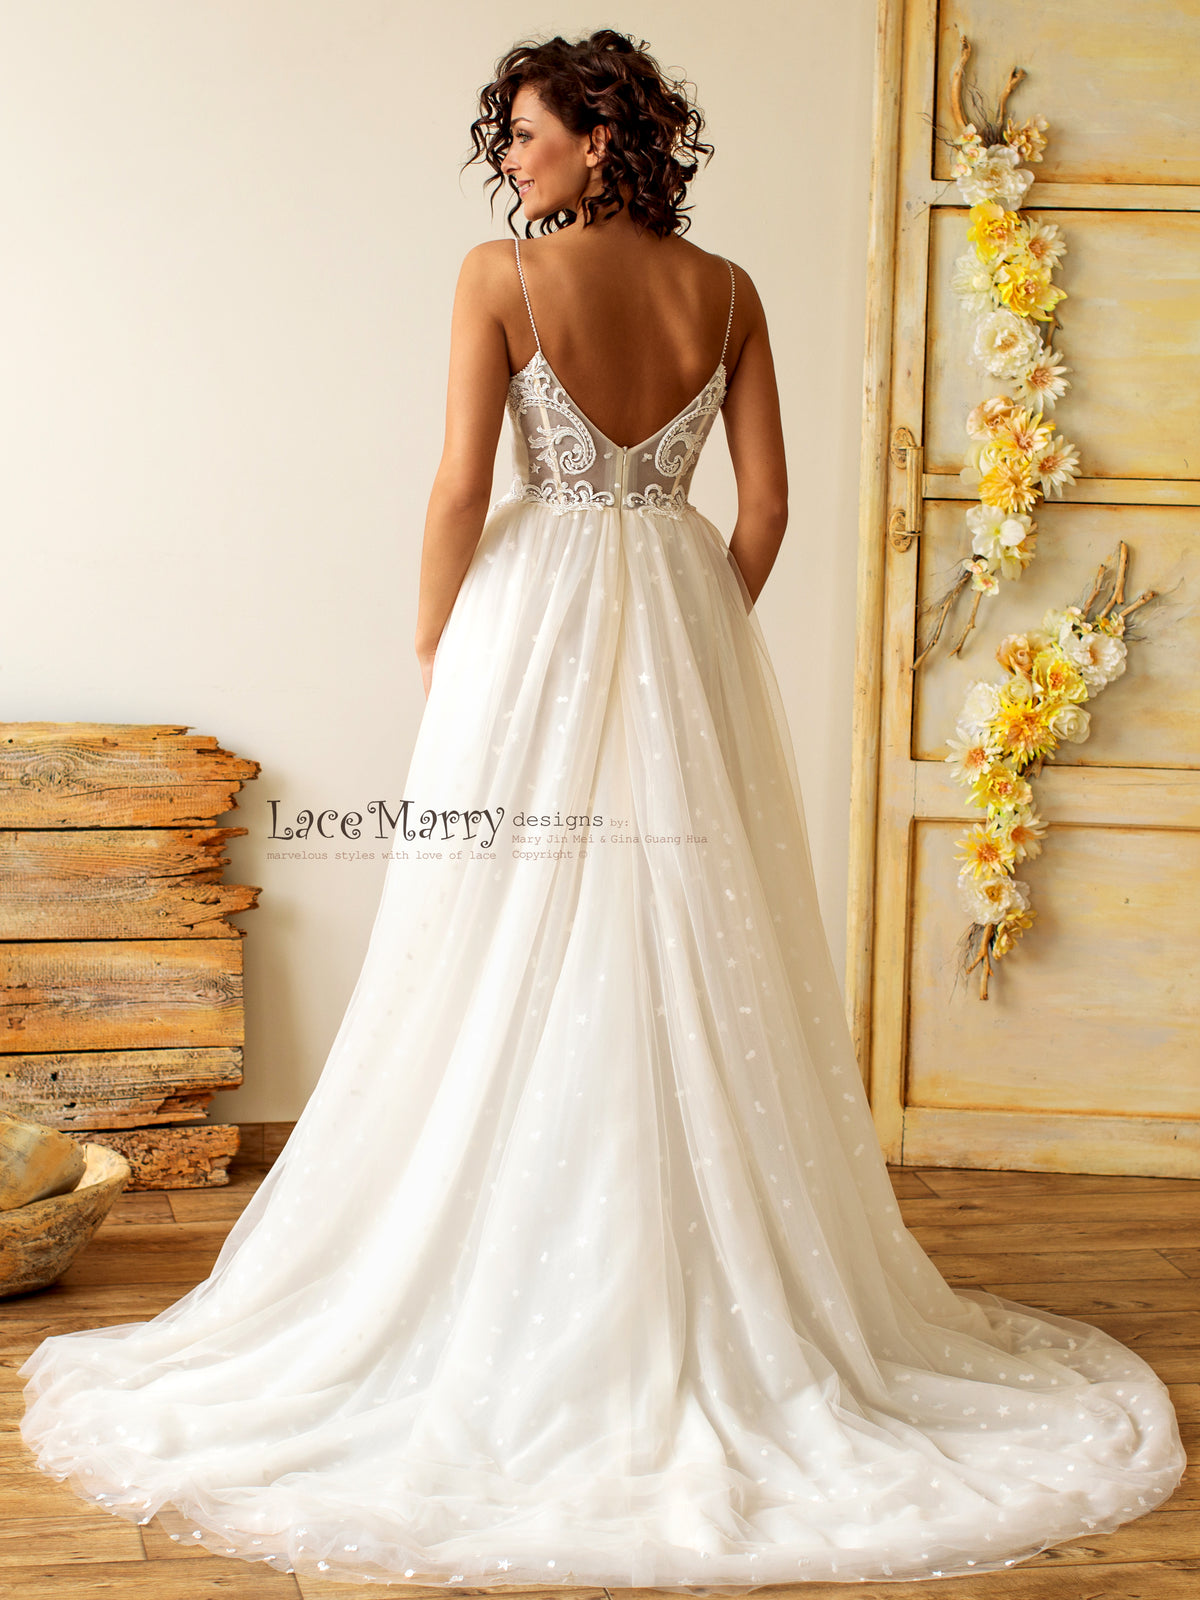 Amazing Wedding Dress with Extra Thin Straps